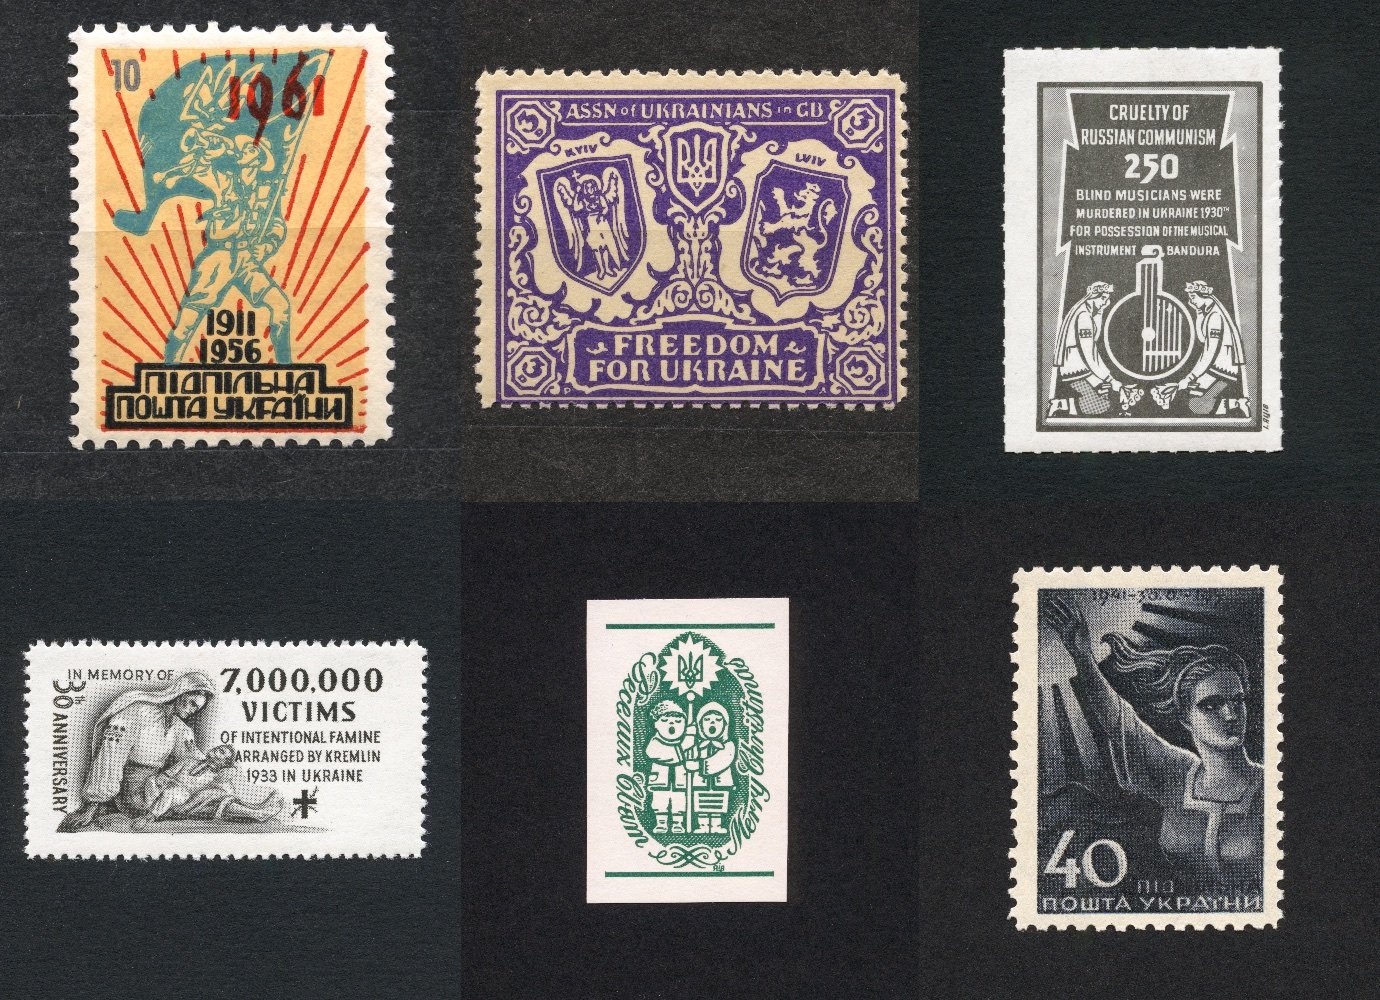 How the Ukrainian diaspora denounced Soviet repression through underground postage stamps